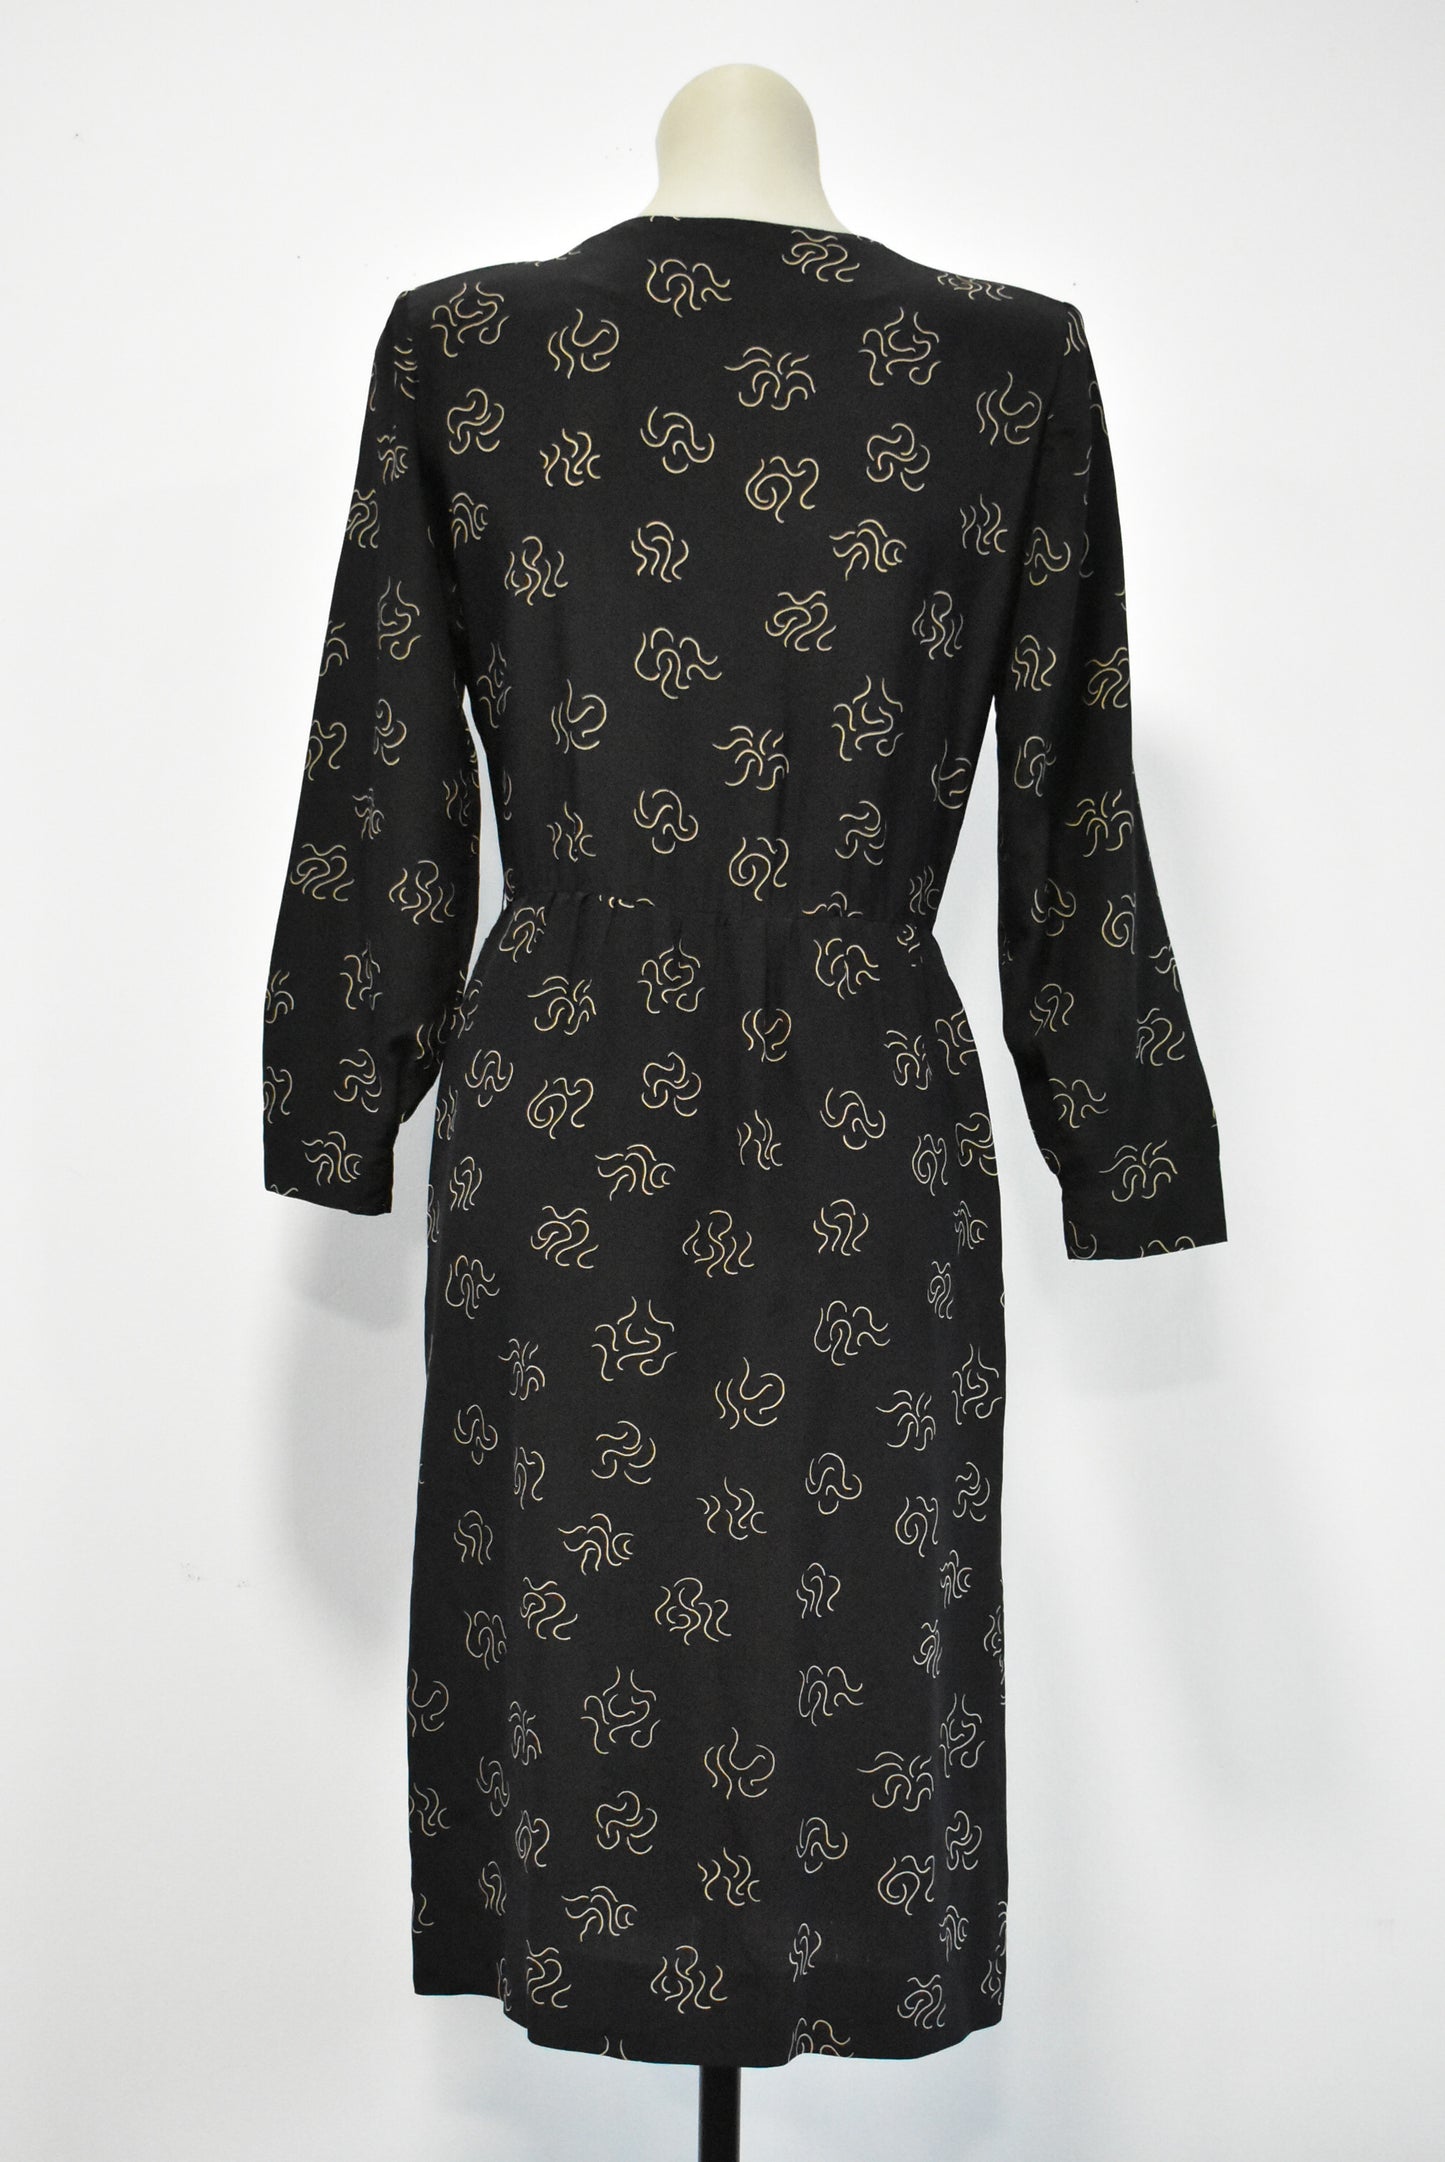 Christian Dior, vintage black silk dress, 10